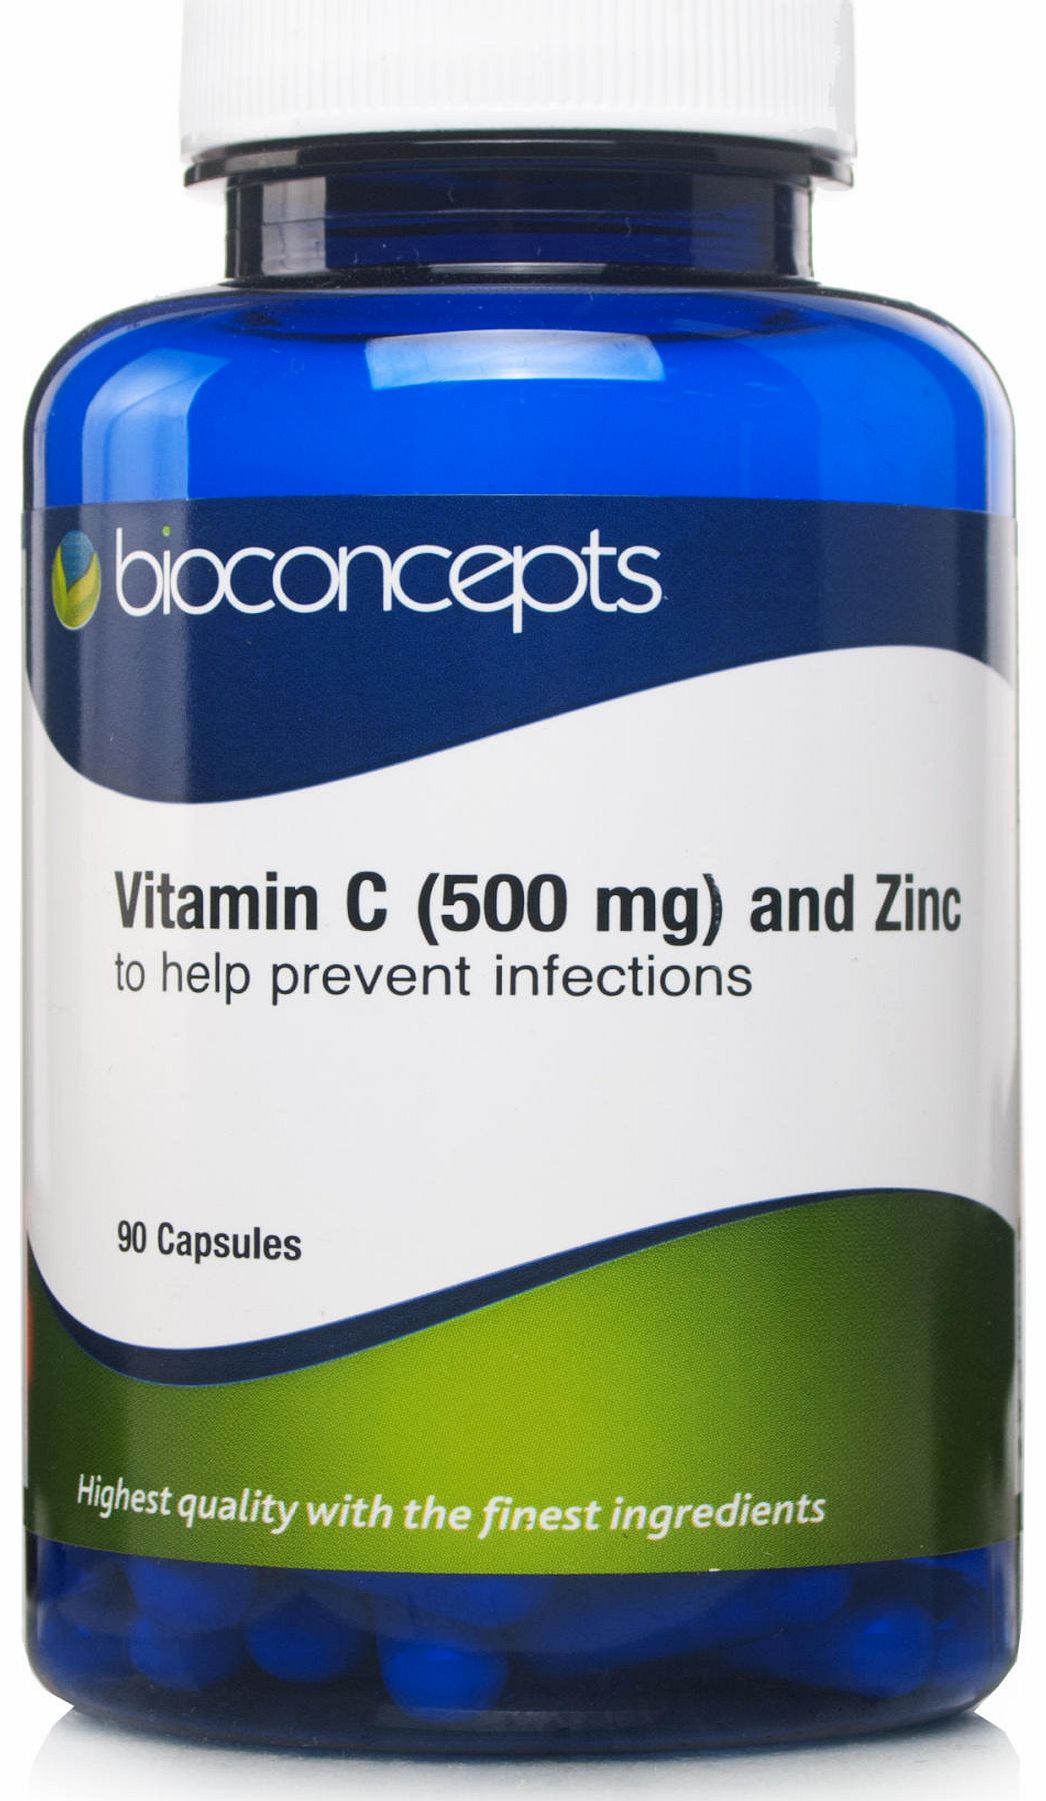 Vitamin C (500mg) and Zinc